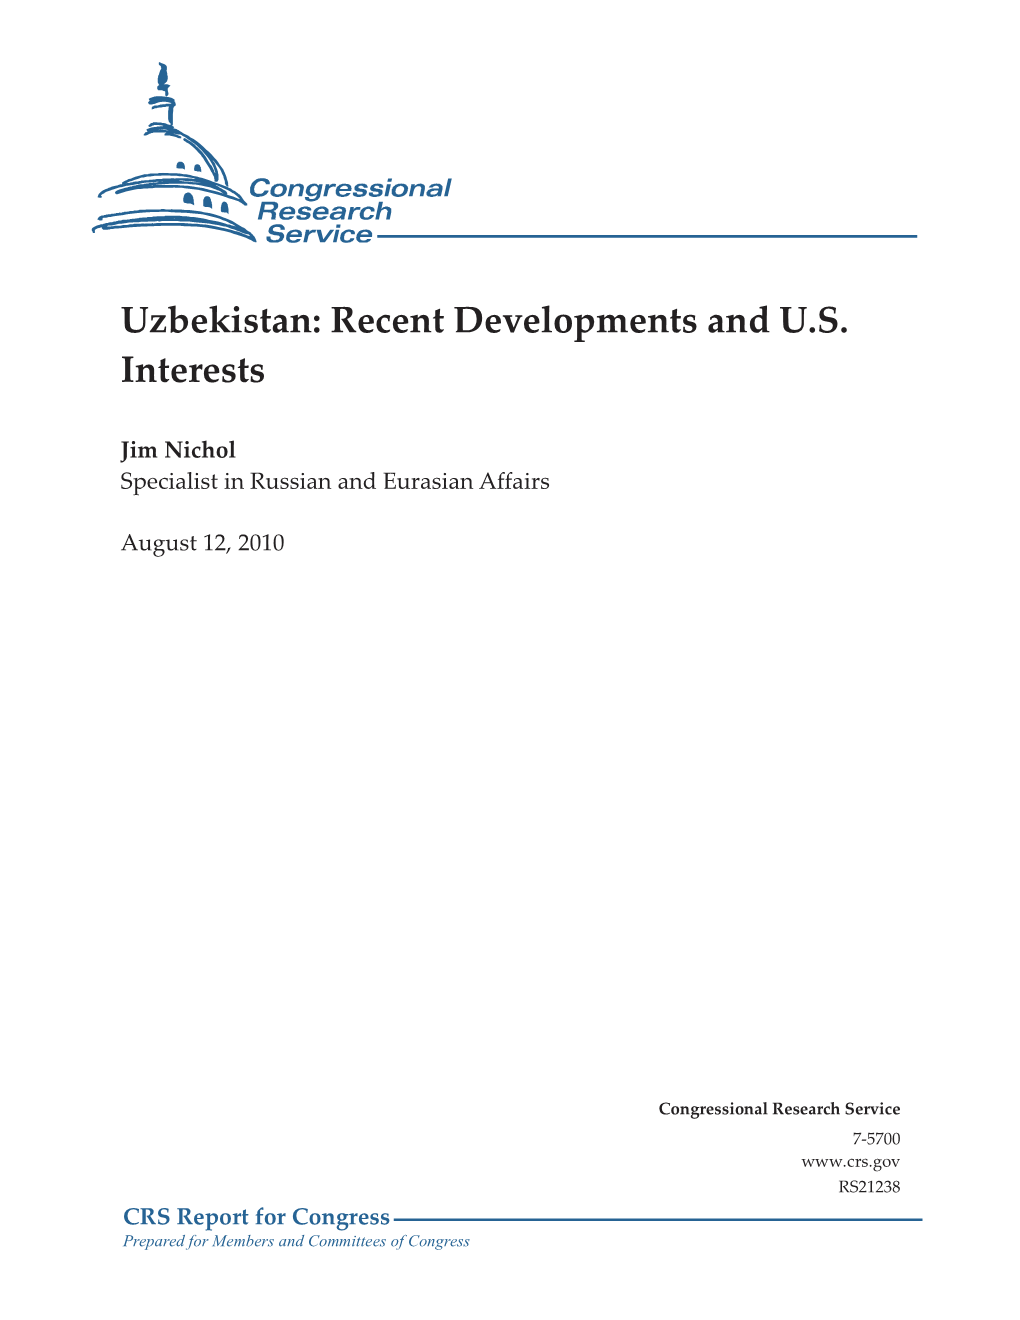 Uzbekistan: Recent Developments and U.S. Interests